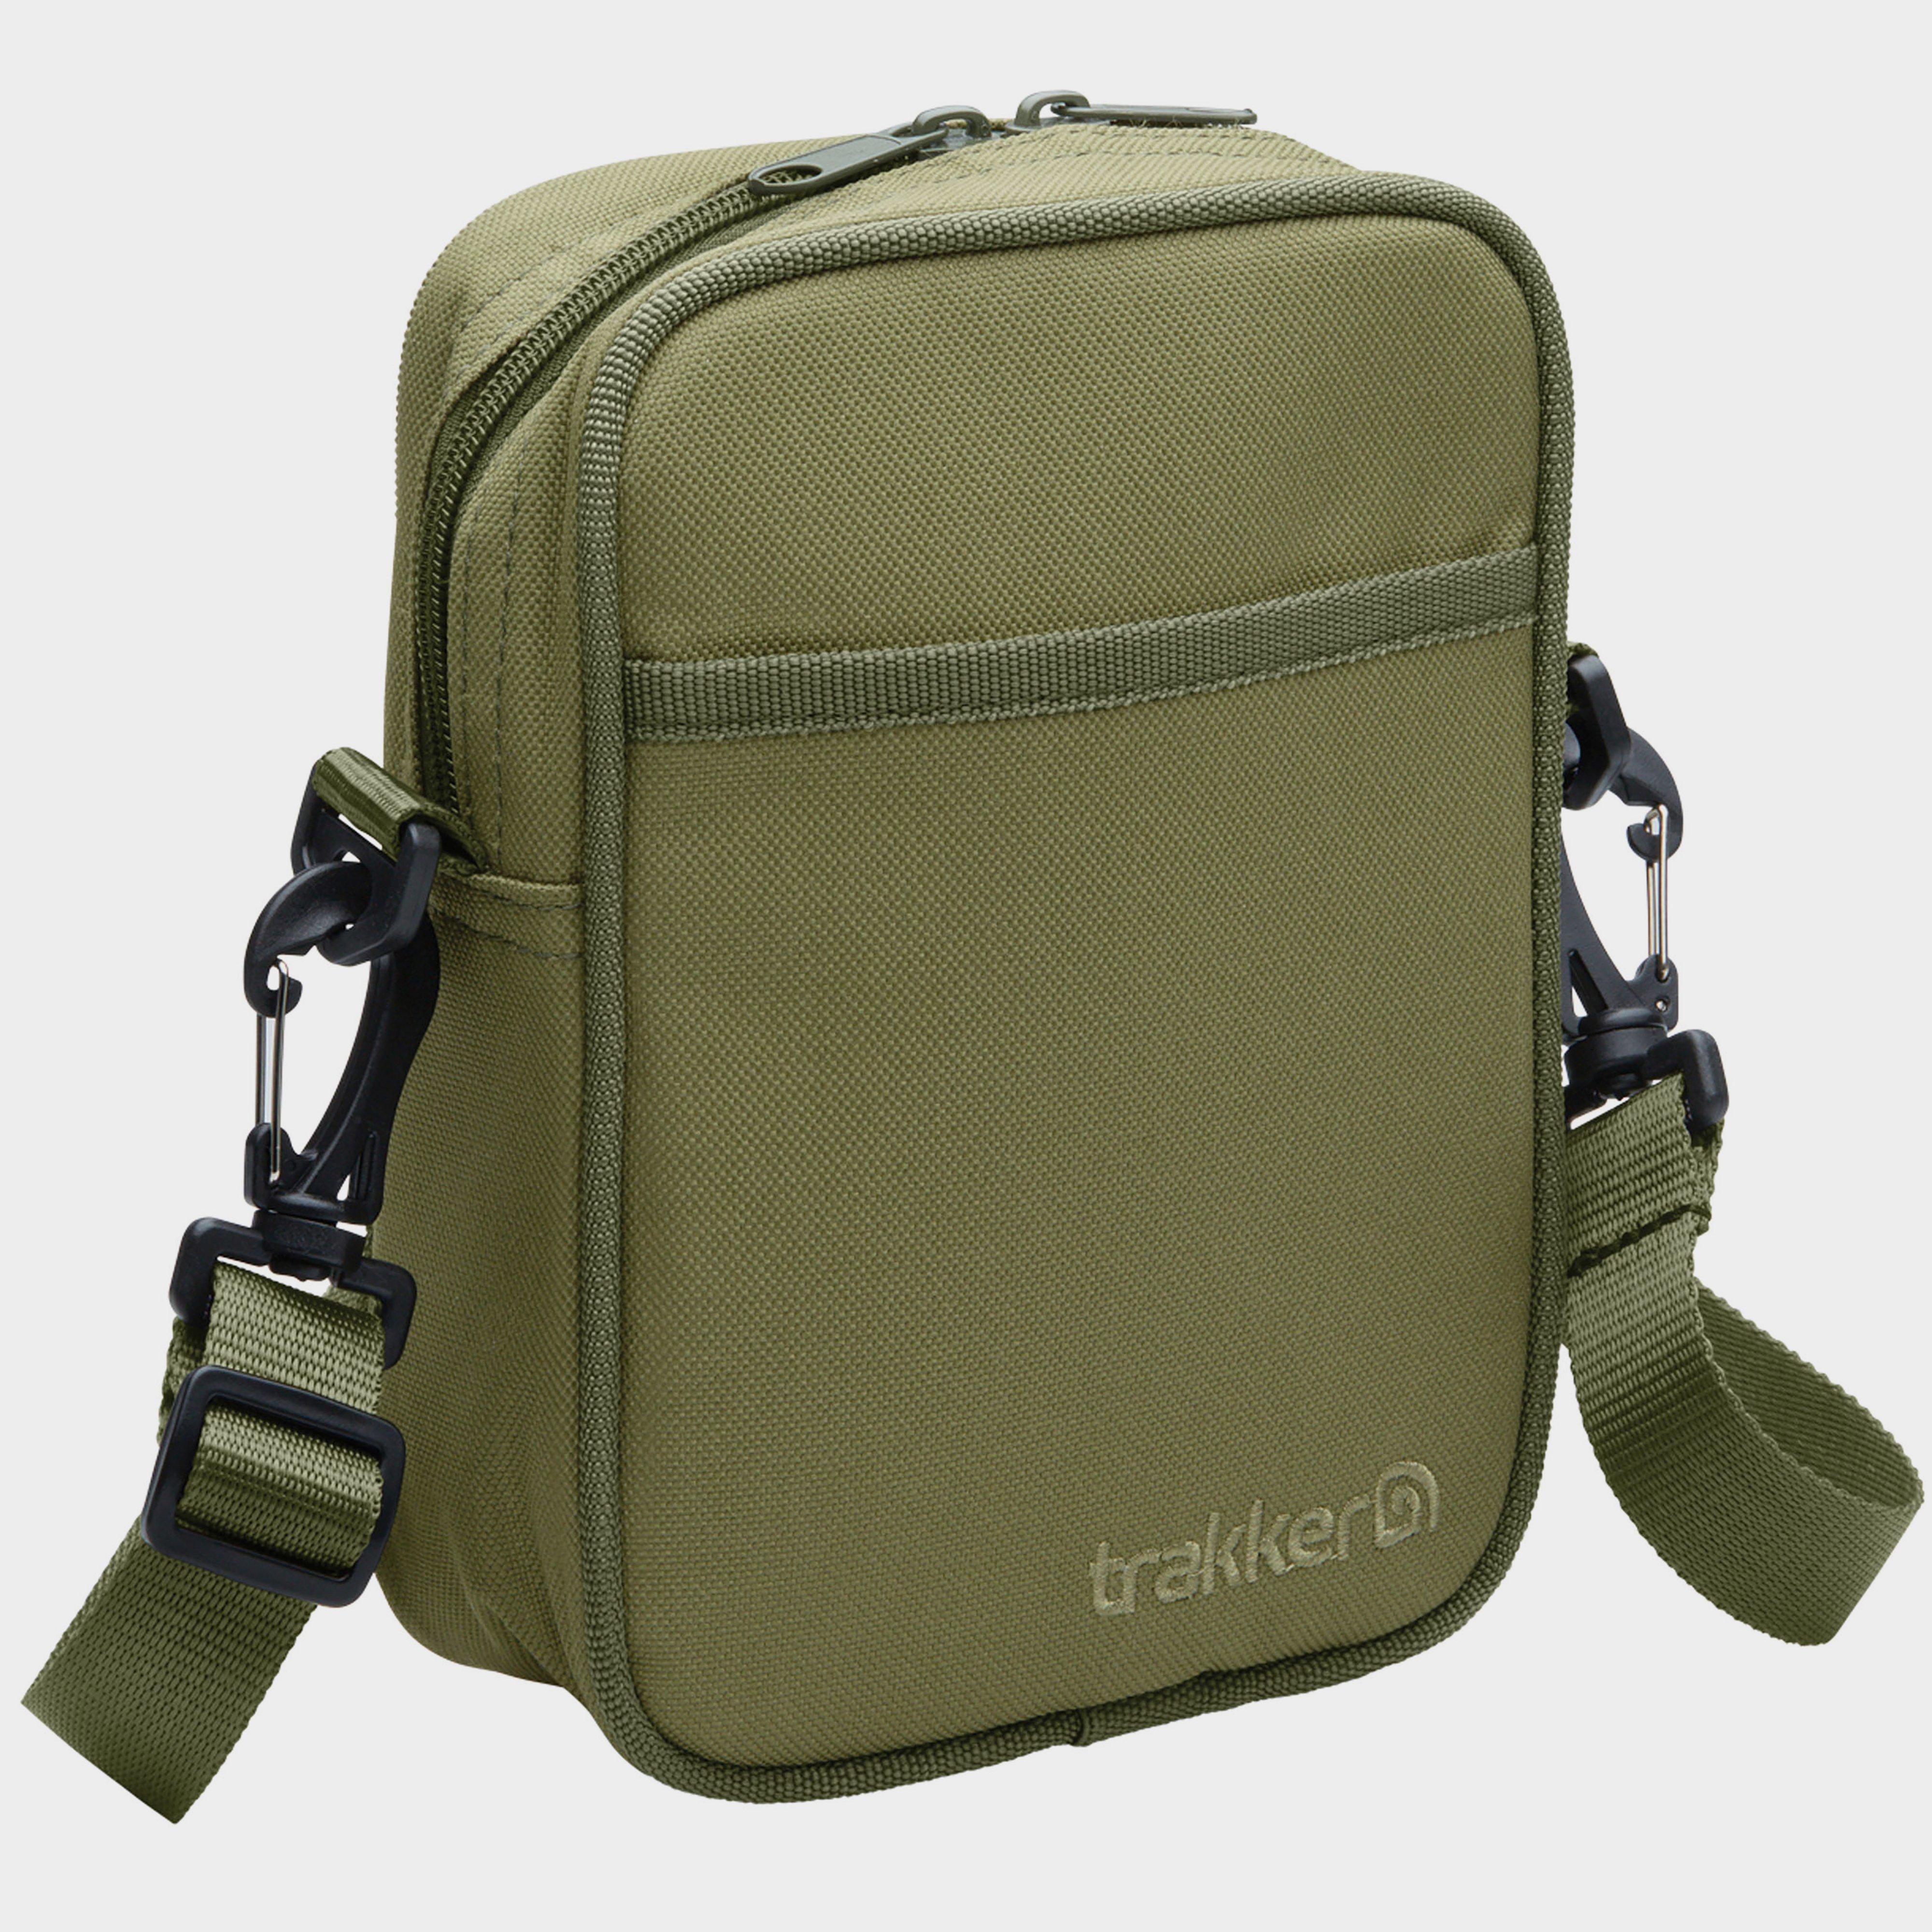 Trakker Nxg Essentials Bag - Bag/bag  Bag/bag